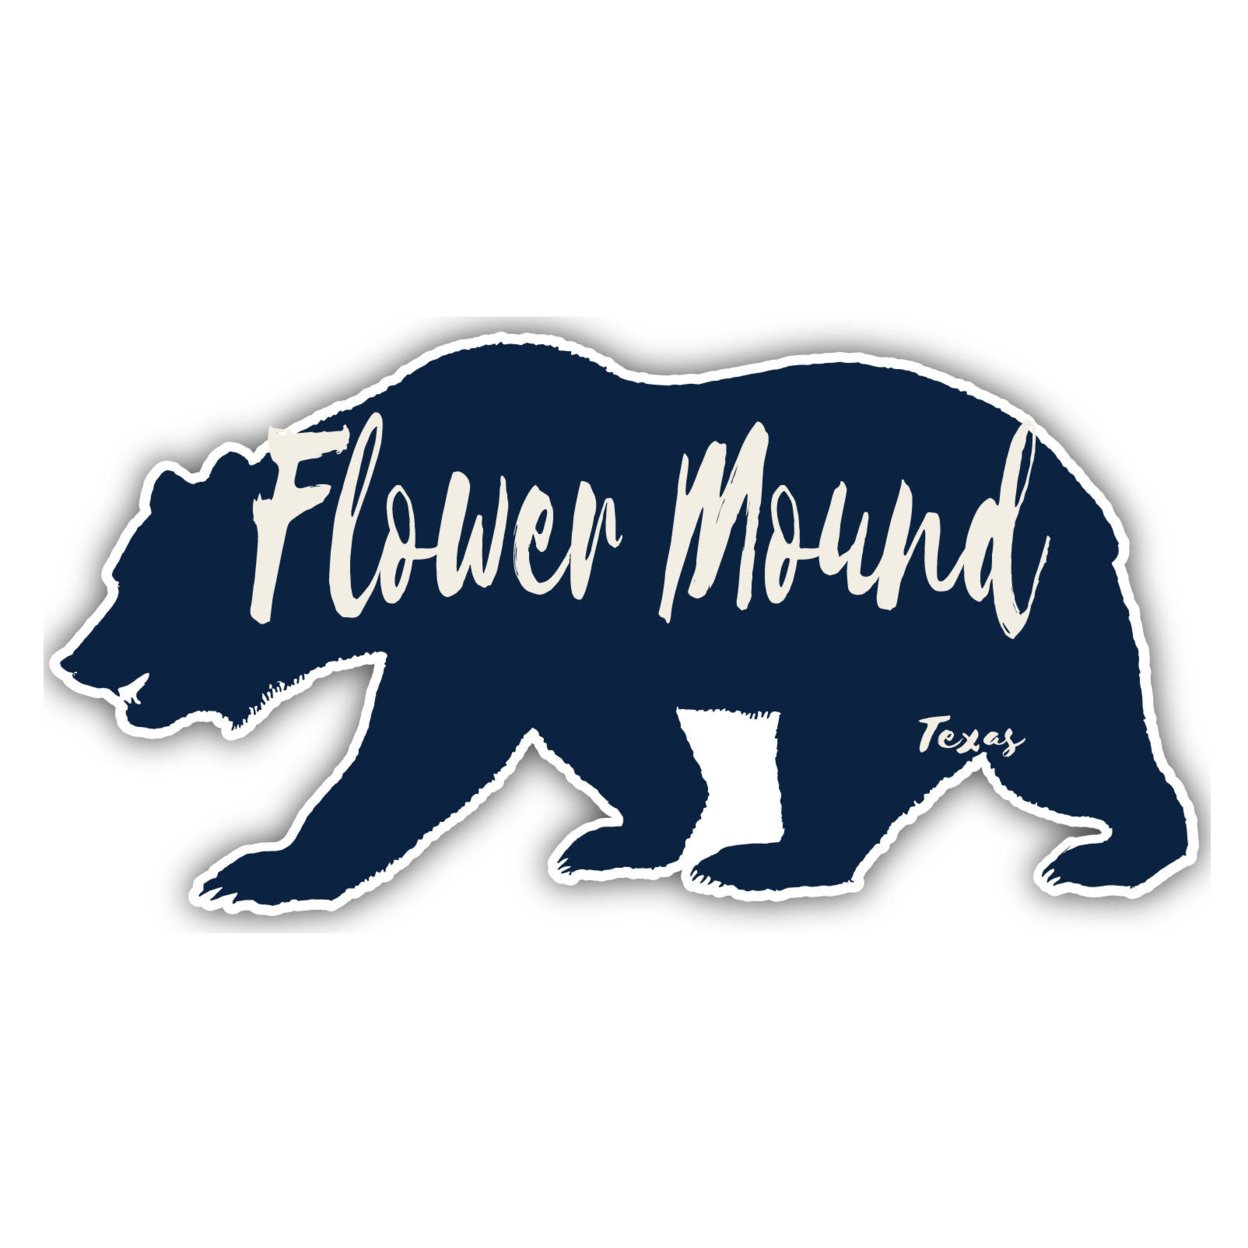 Flower Mound Texas Souvenir Decorative Stickers (Choose Theme And Size) - Single Unit, 12-Inch, Camp Life